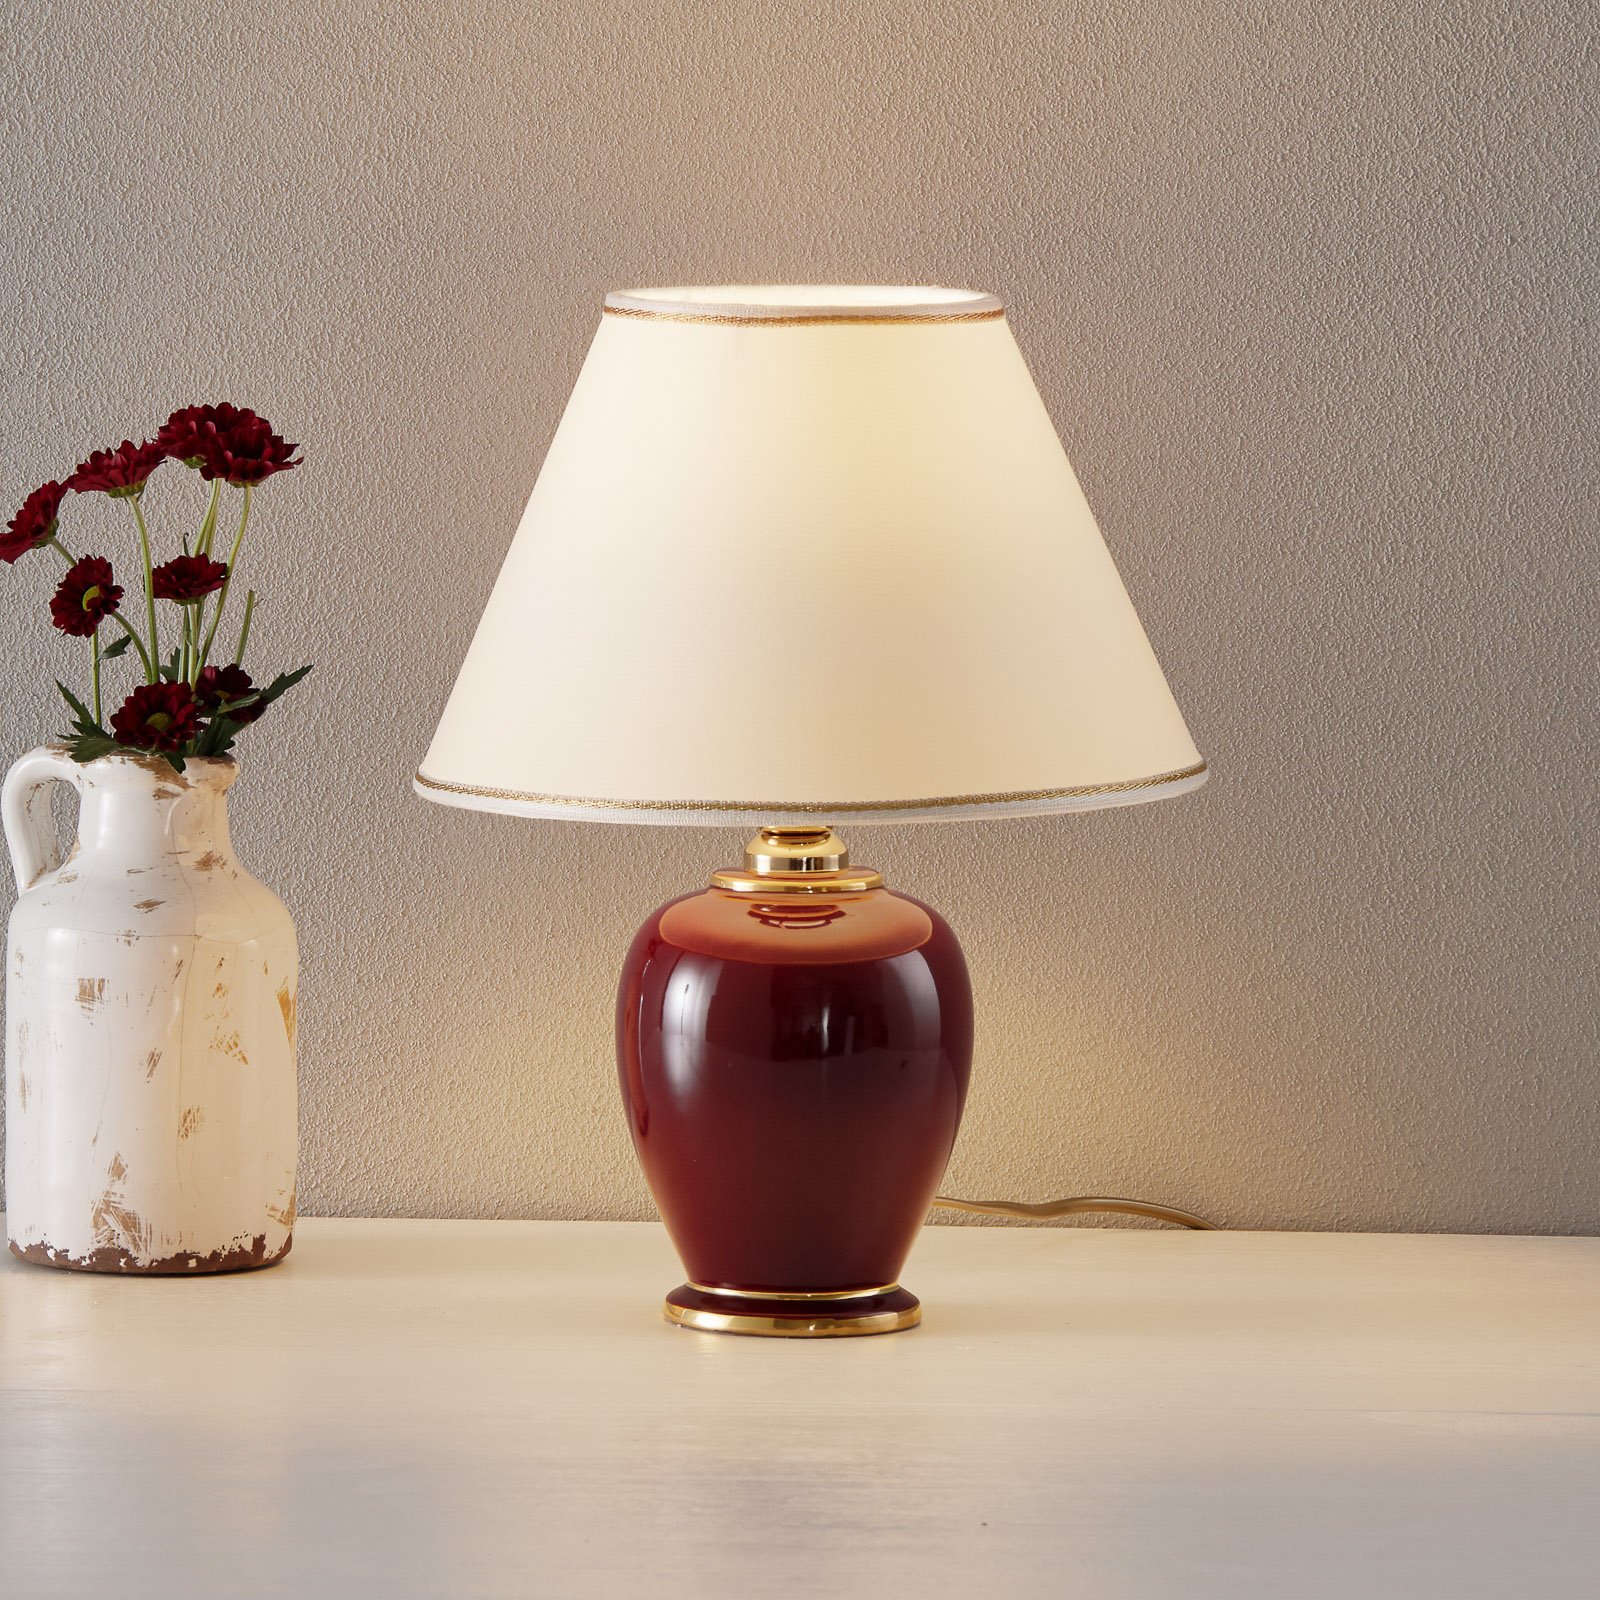 KOLARZ Bordeaux - lampada da tavolo alta 34 cm